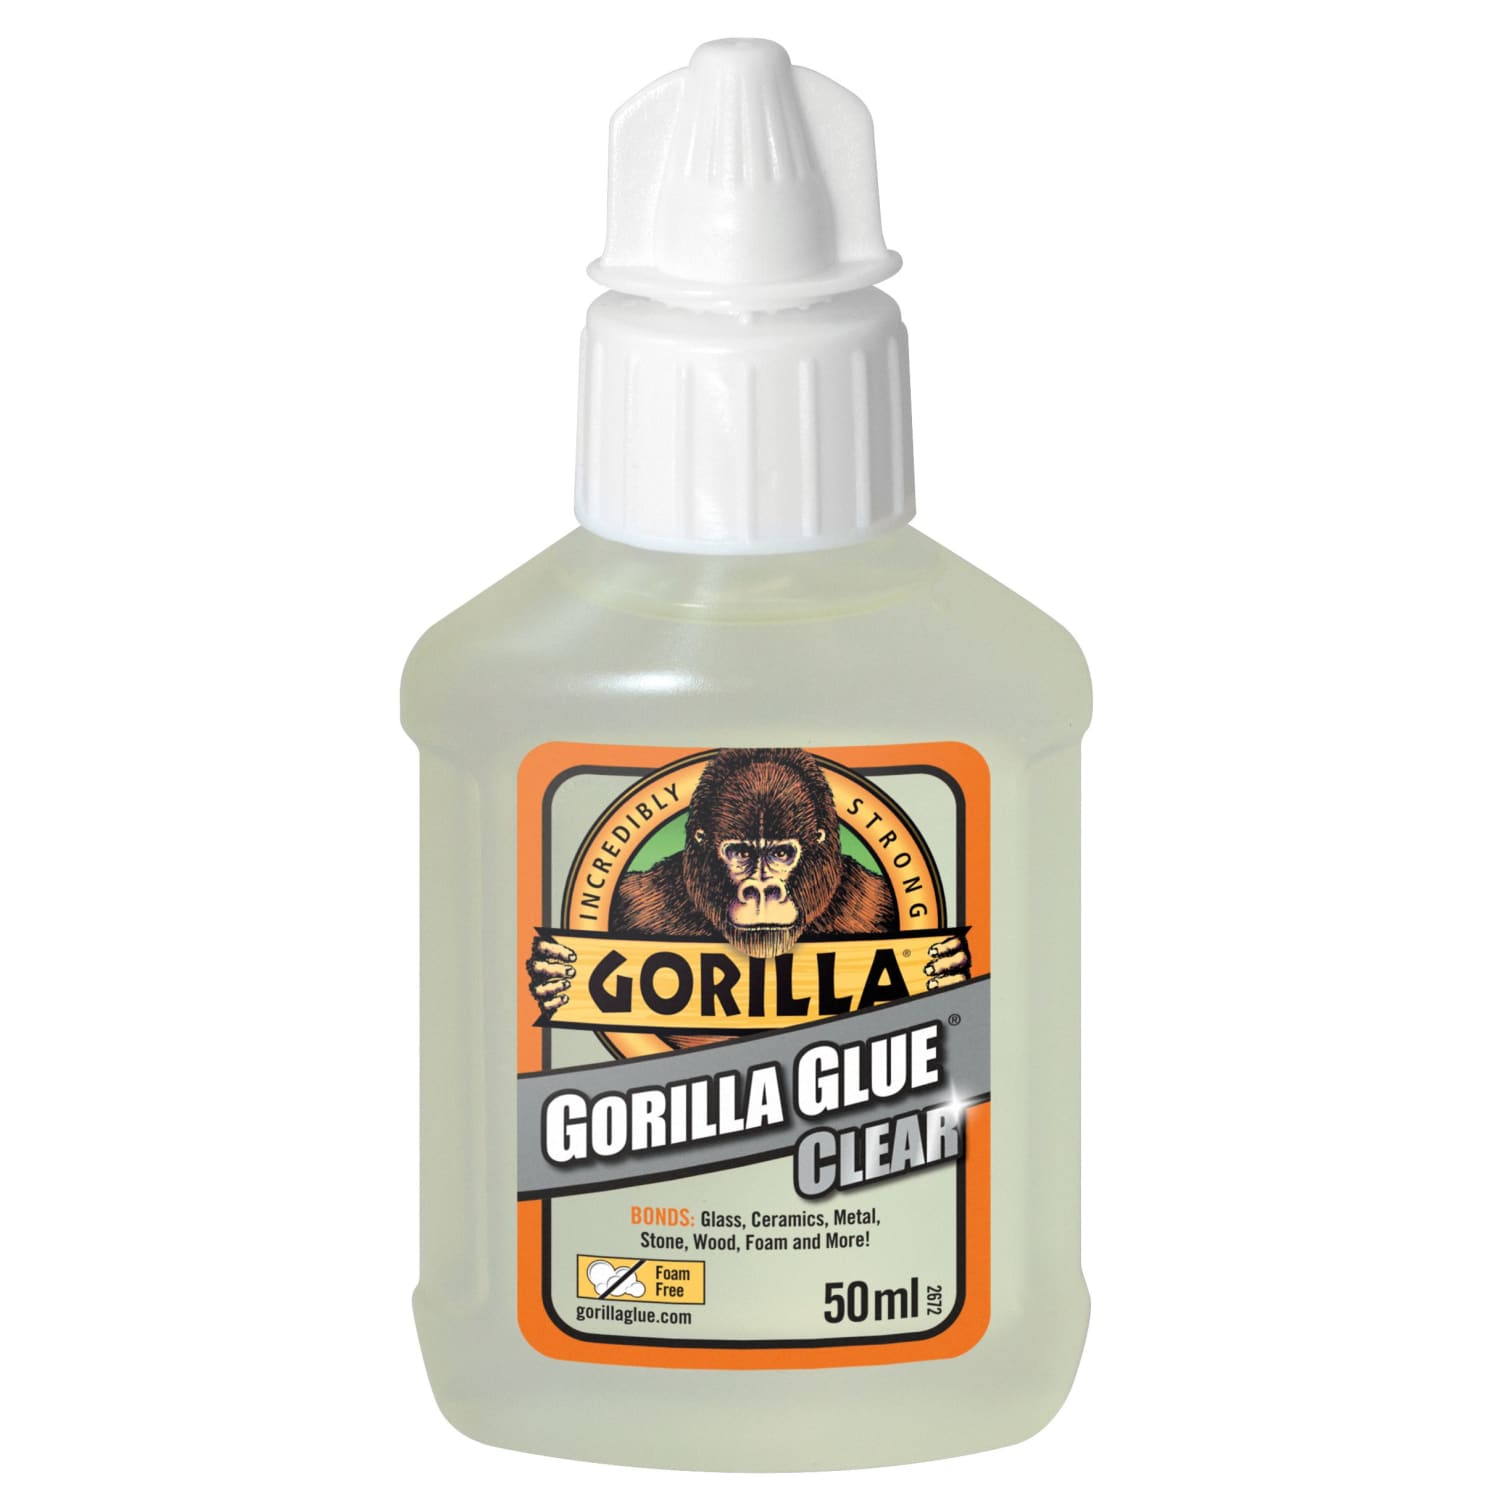 Gorilla High Strength Clear Glue 1.75 oz - Ace Hardware